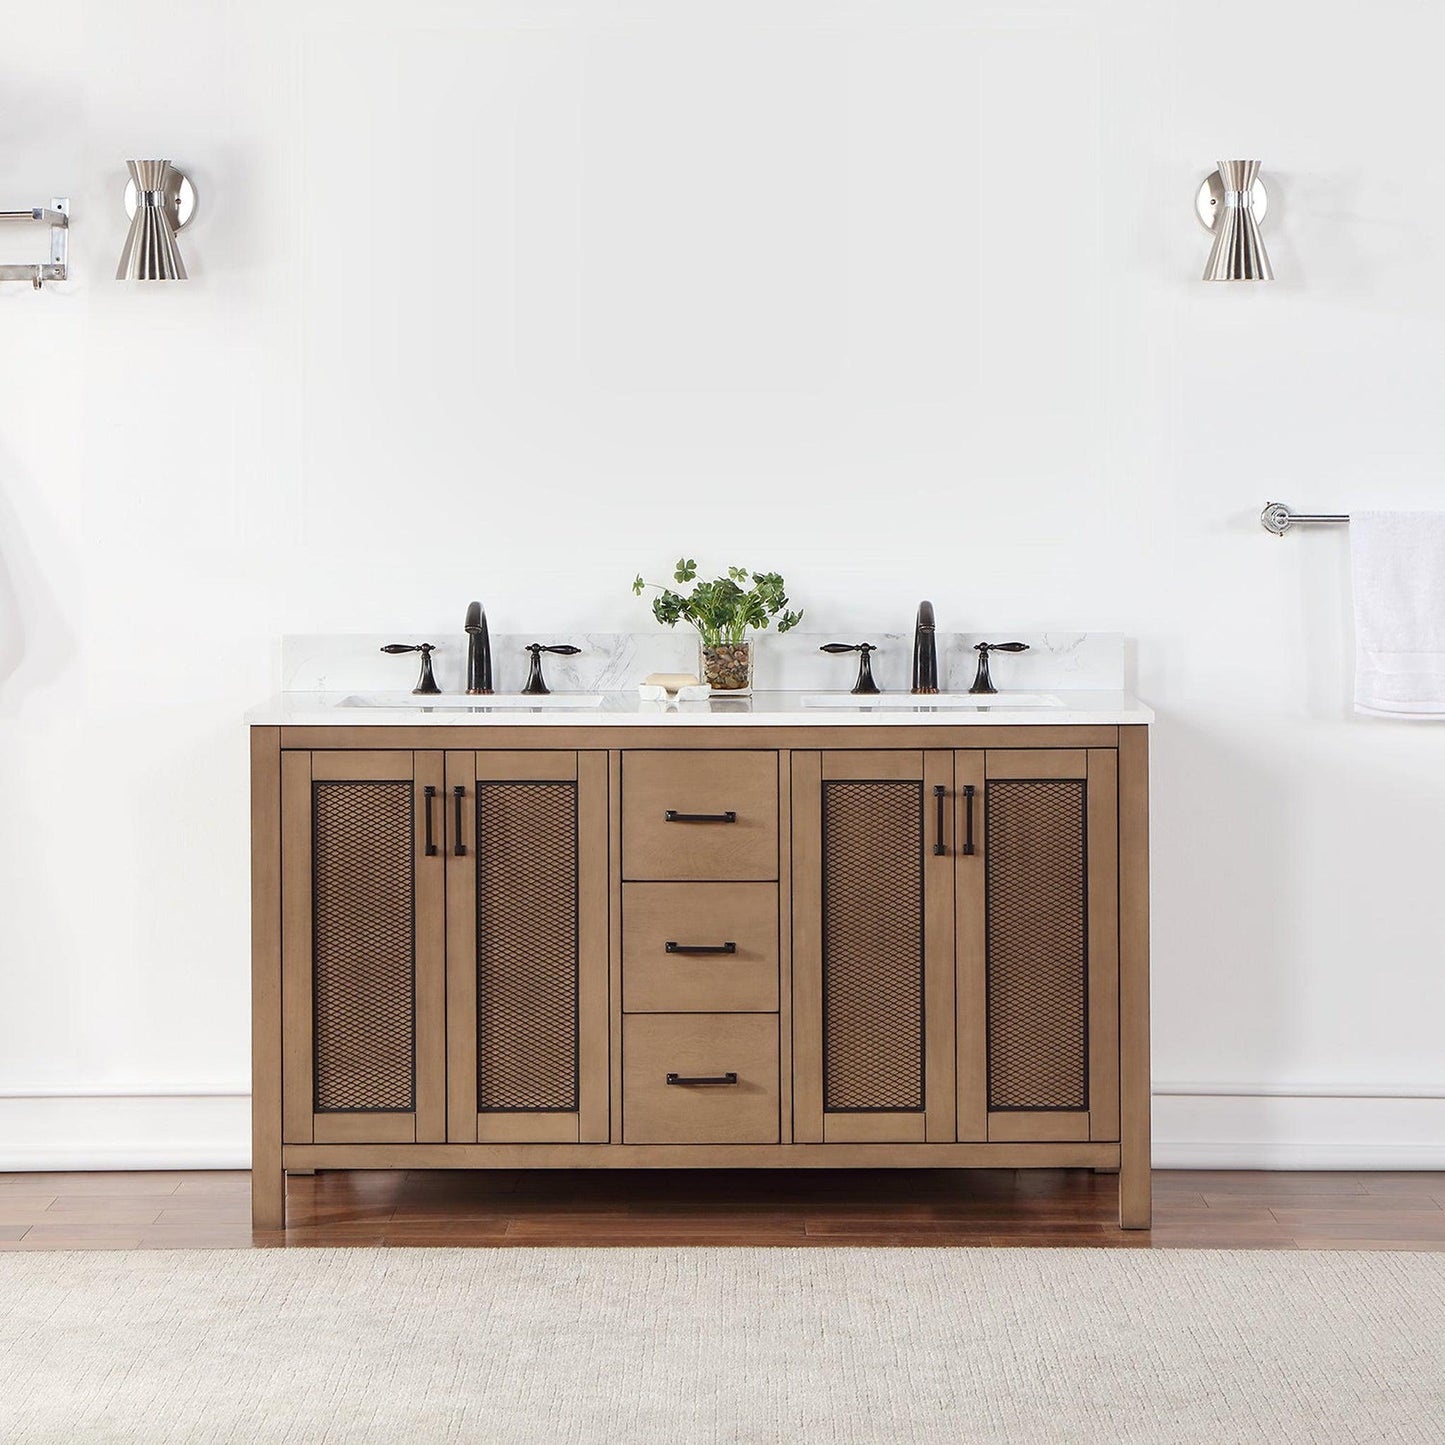 Altair Hadiya 60" Double Brown Pine Freestanding Bathroom Vanity Set With Elegant Aosta White Composite Stone Top, Two Rectangular Undermount Ceramic Sinks, Overflow, and Backsplash